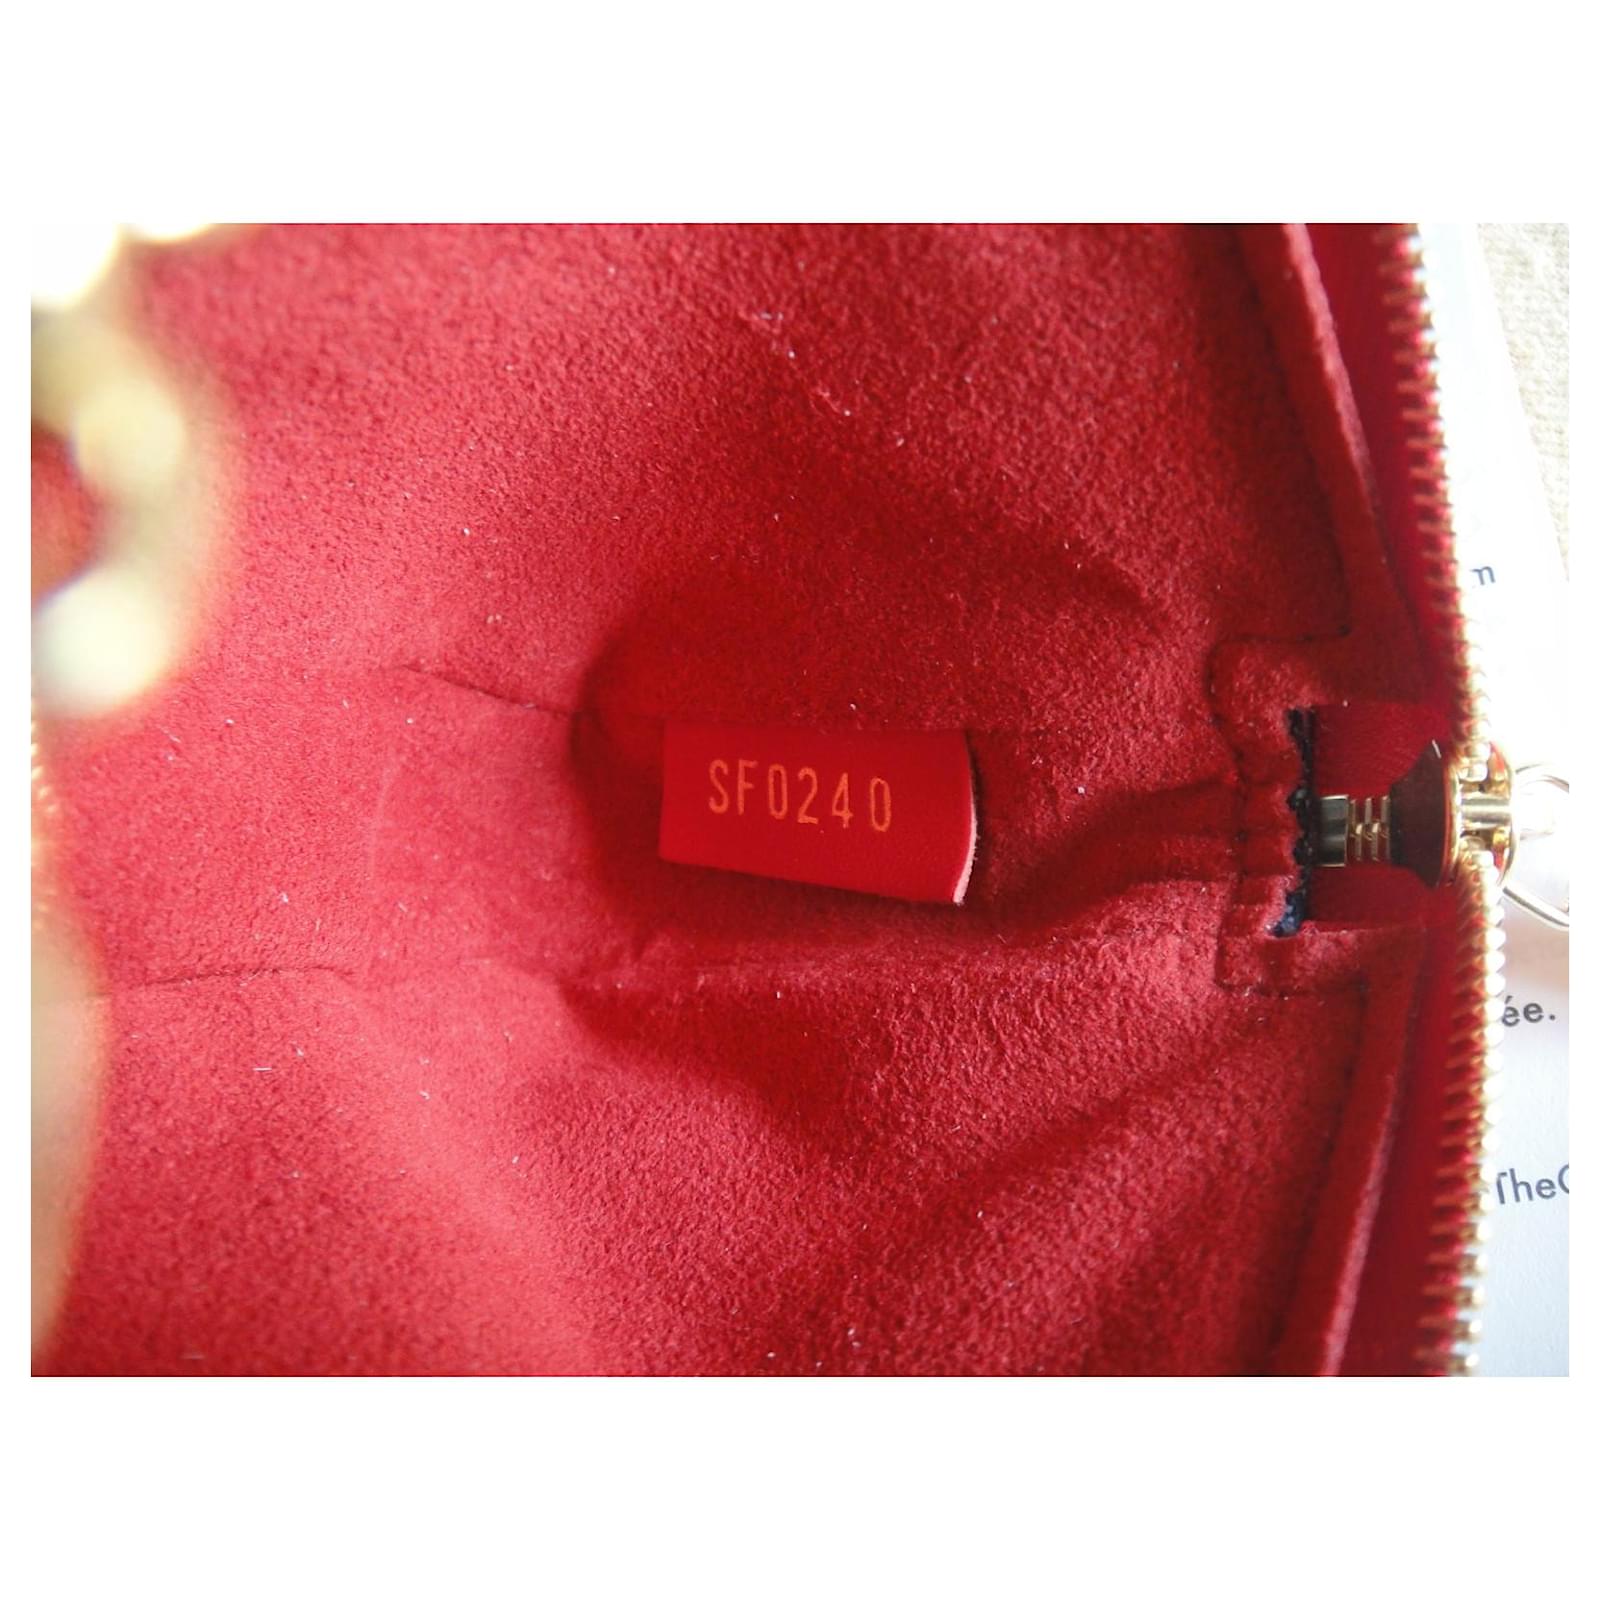 Louis Vuitton Rare Limited Edition Damier Ebene Keychain Bag Charm